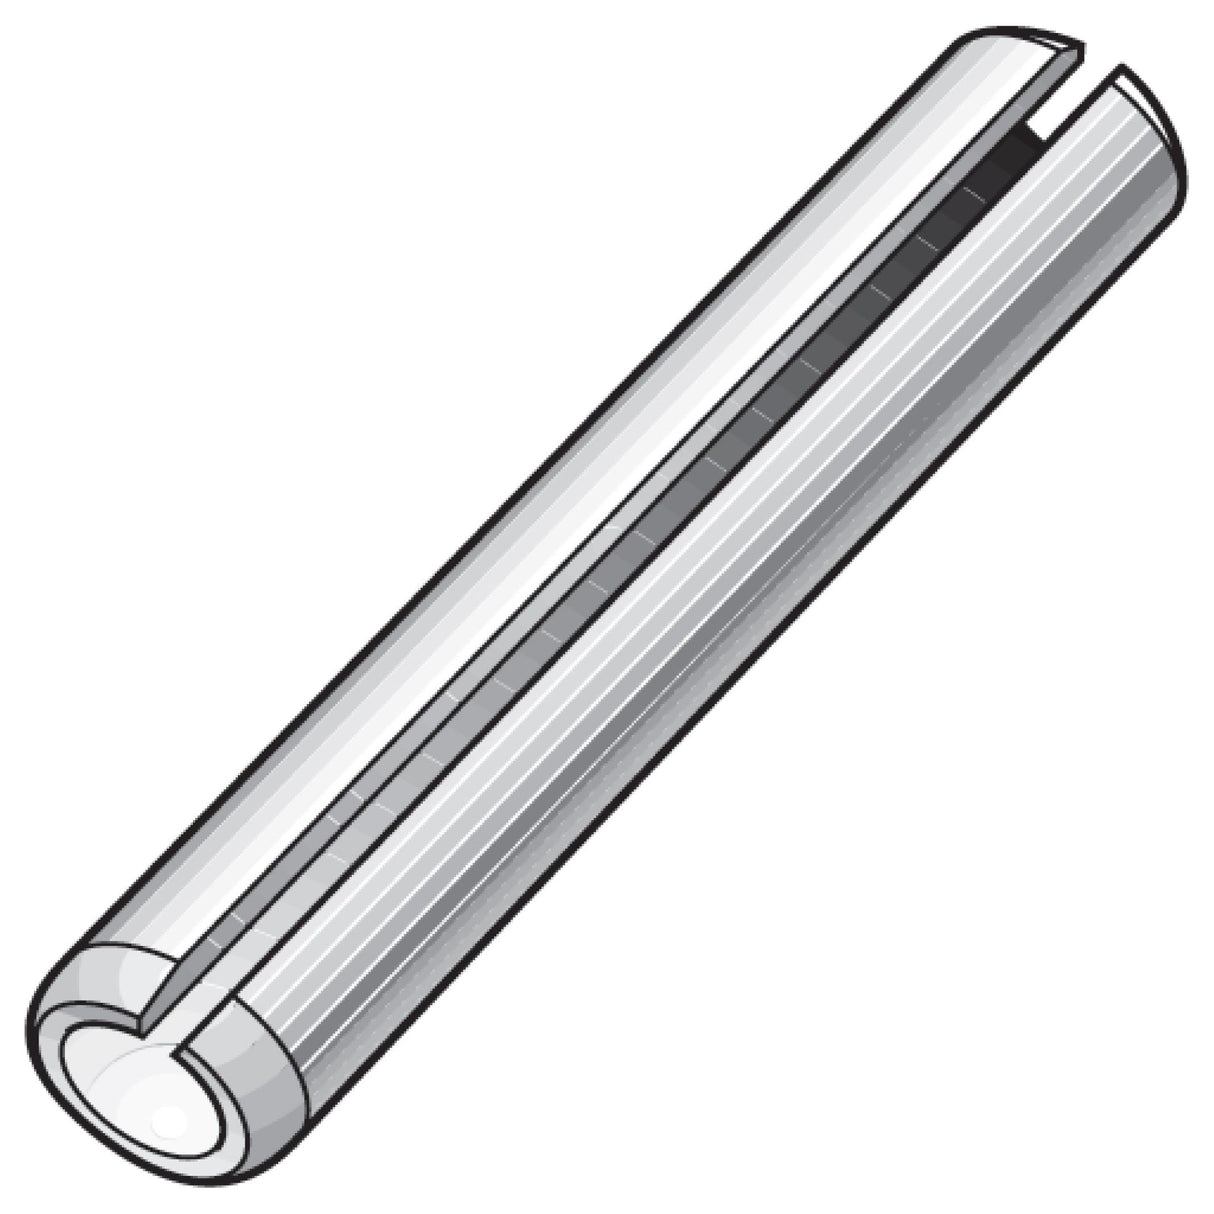 Metric Roll Pin, Pin⌀8mm x 50mm
 - S.1207 - Farming Parts